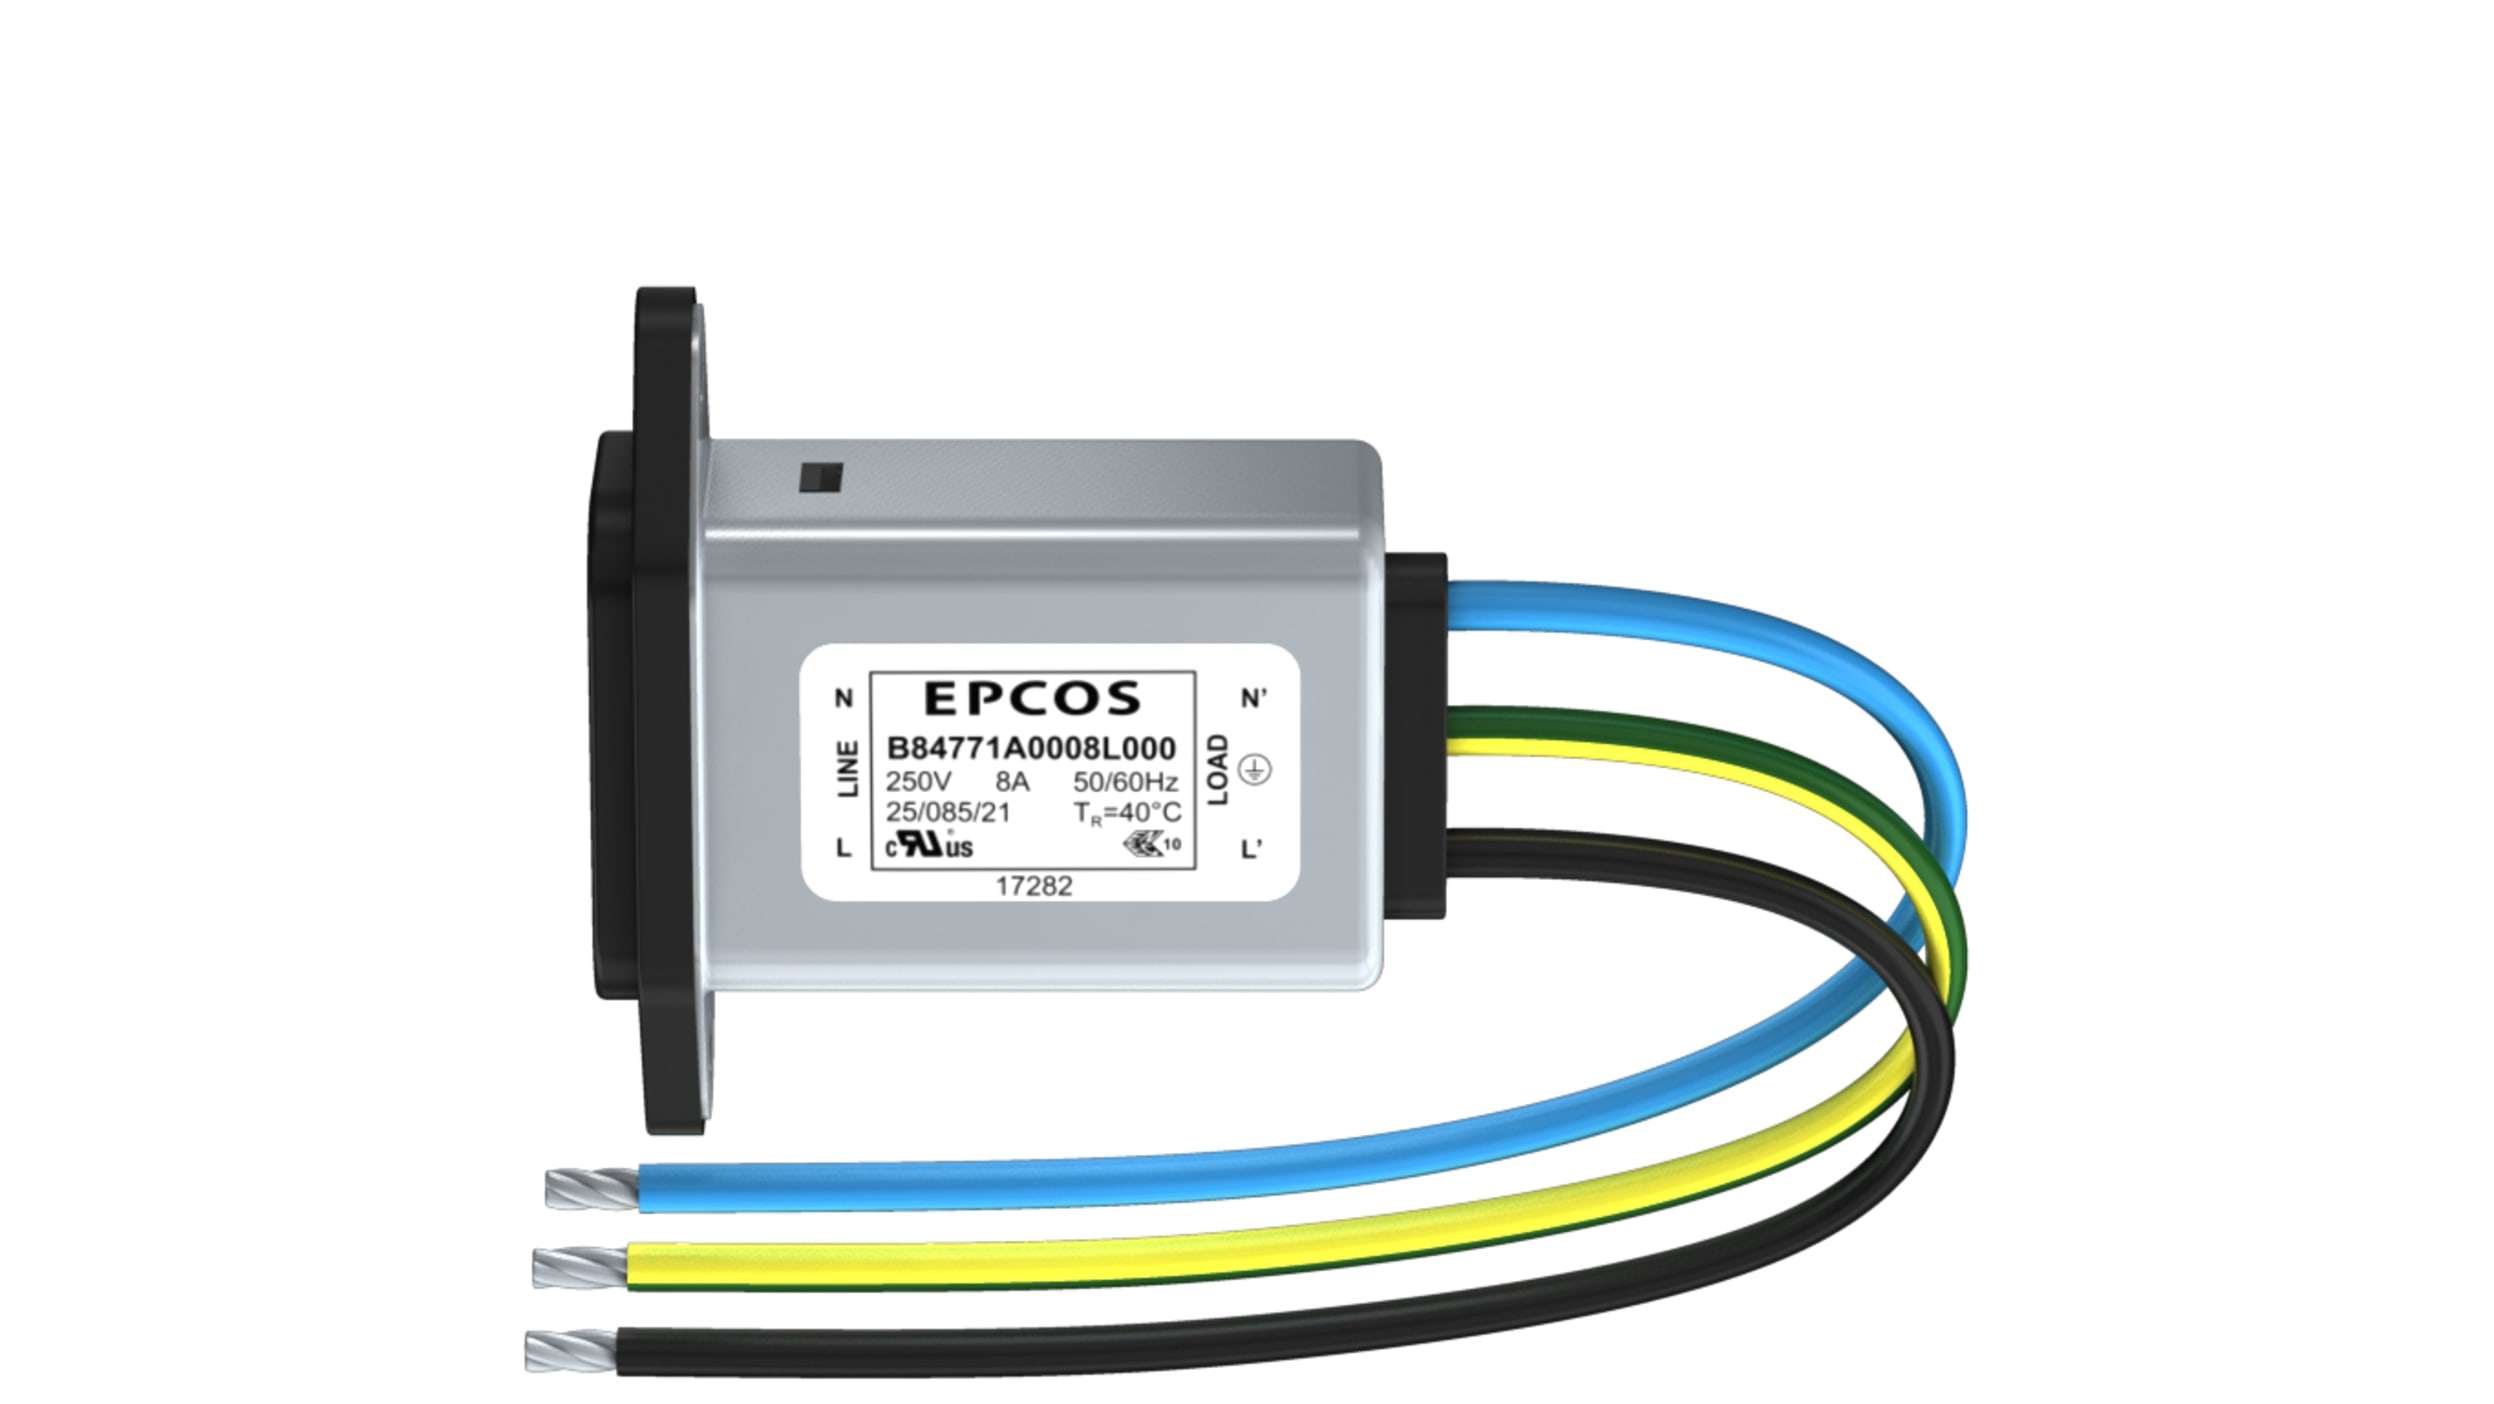 B84771A0008L000, EPCOS C14 IEC-Anschlussfilter Stecker, 250 V ac/dc / 8A,  Tafelmontage / Drahtanschluss